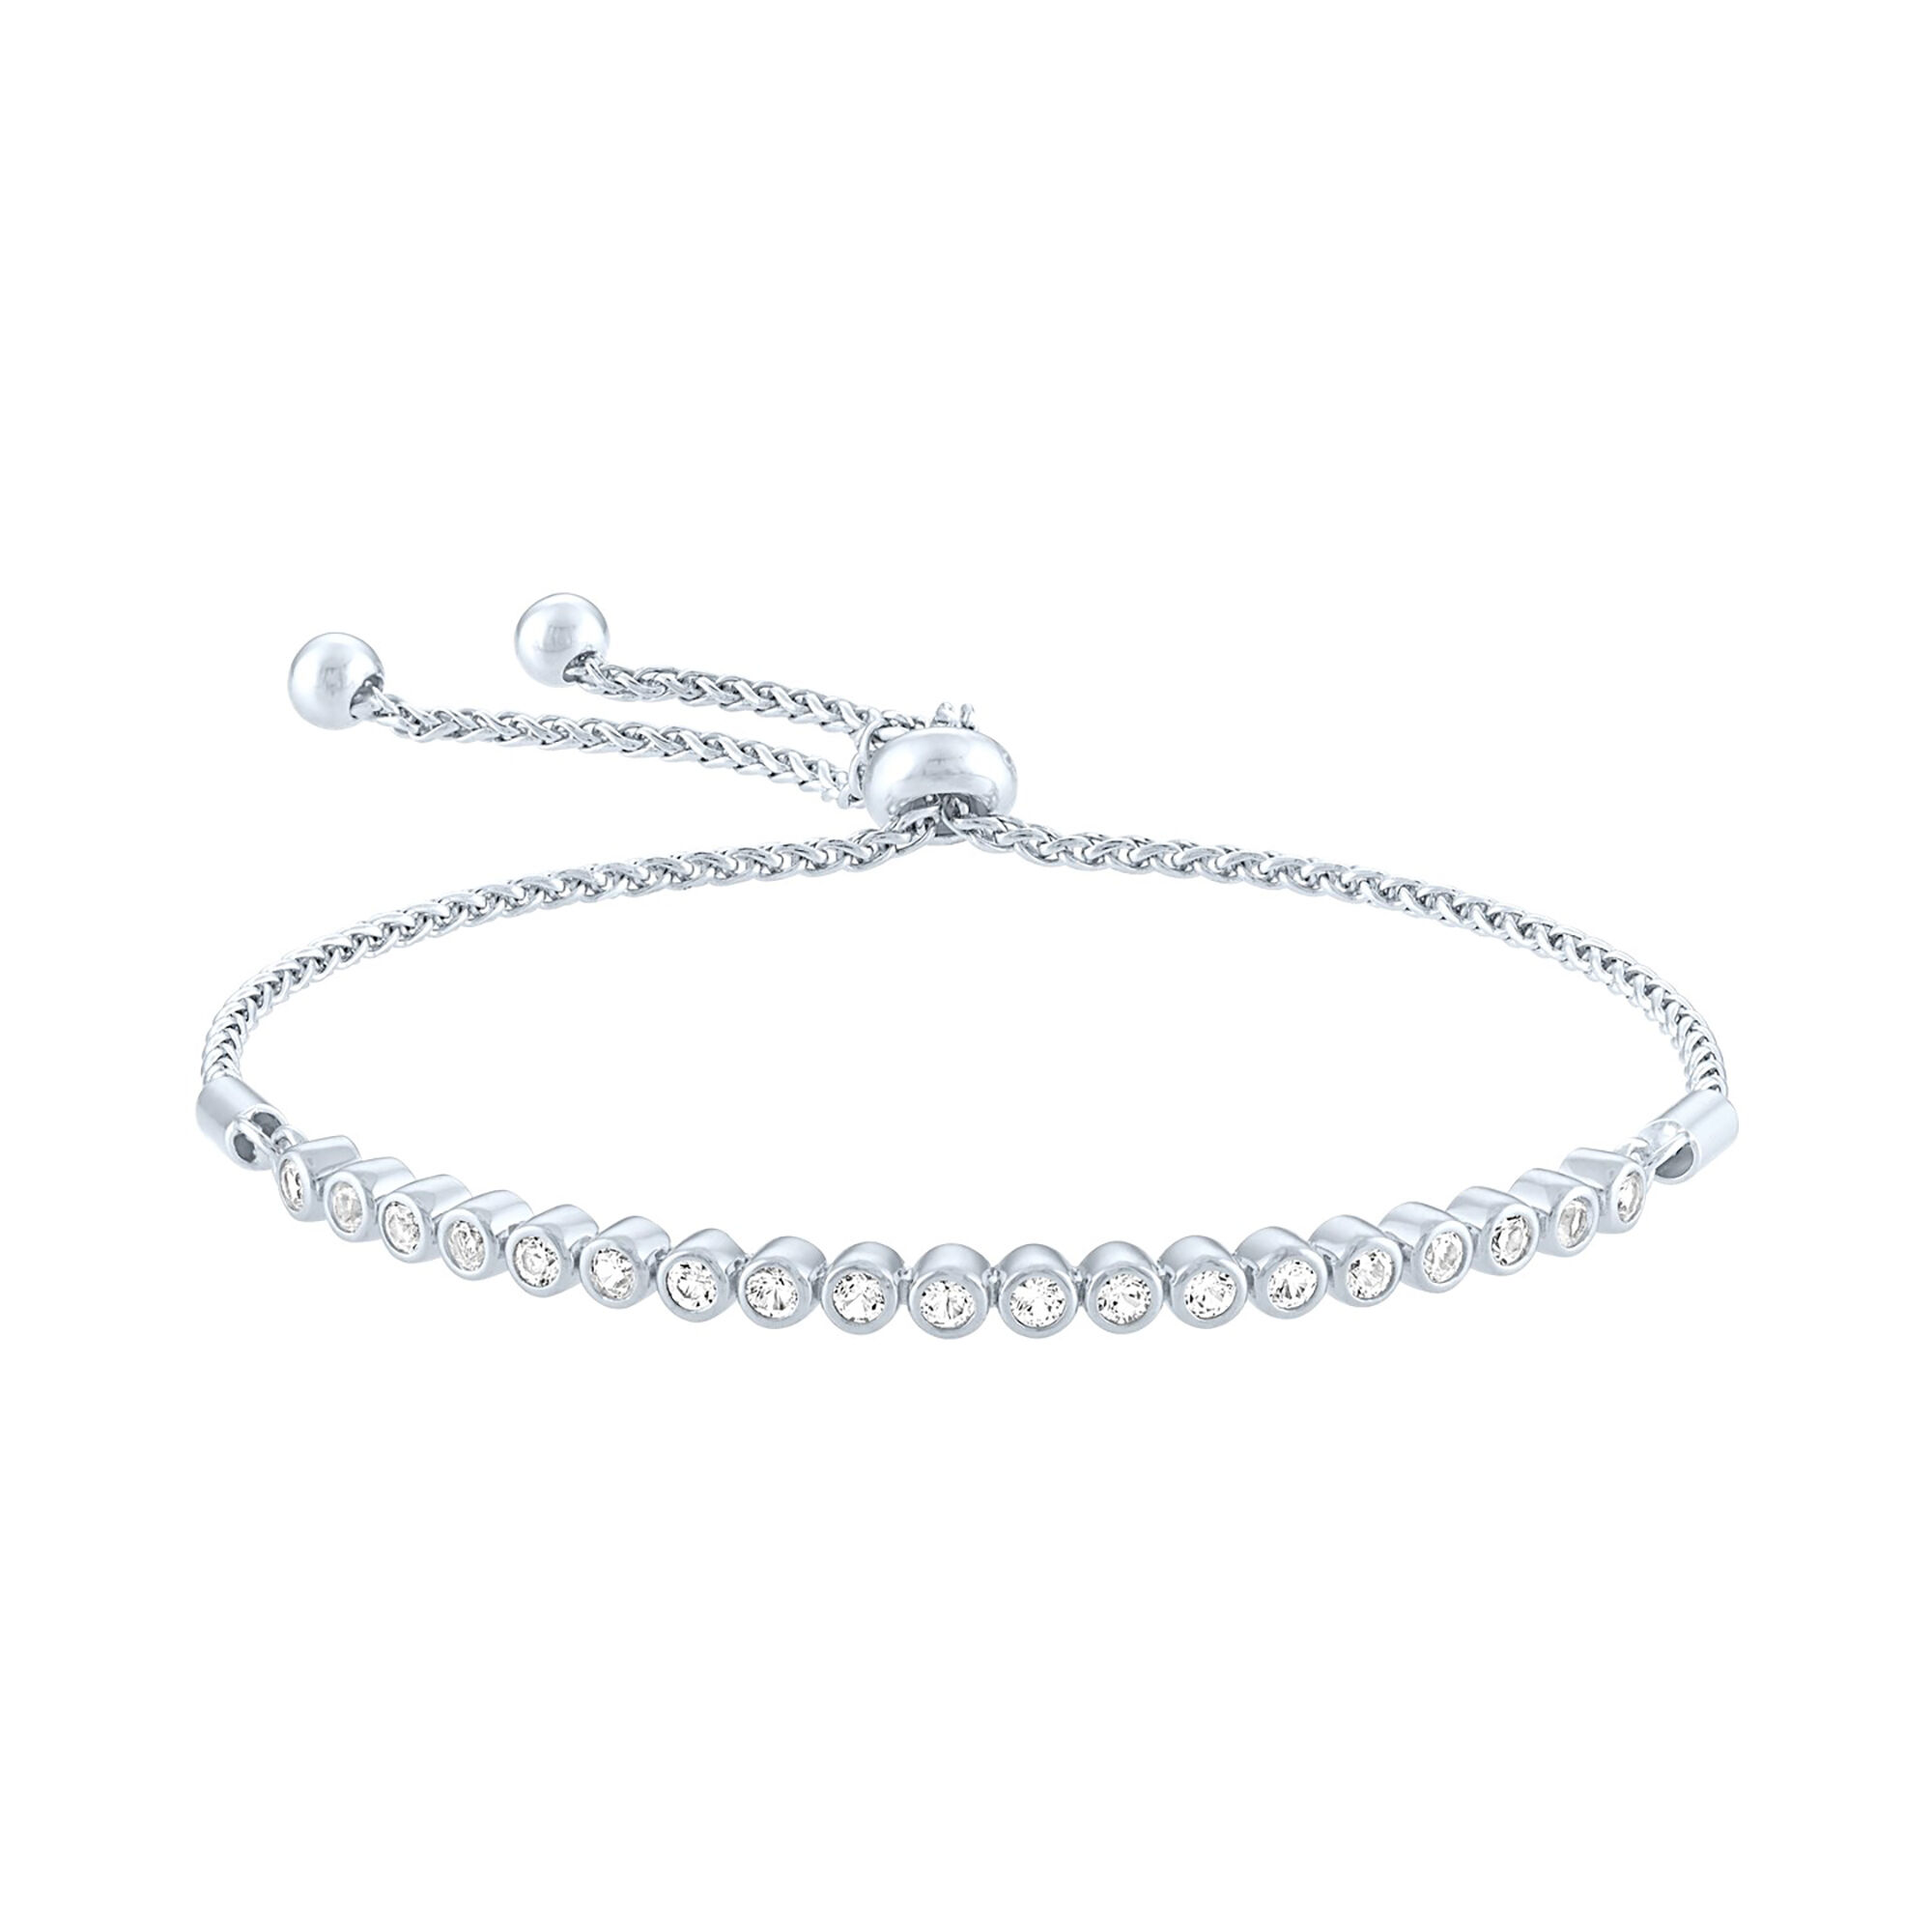 Buy Diamond Accent Bracelet, Adjustable Bolo Bracelet, Heart Bracelet,  Stainless Steel And Sterling Silver Bracelet at ShopLC.